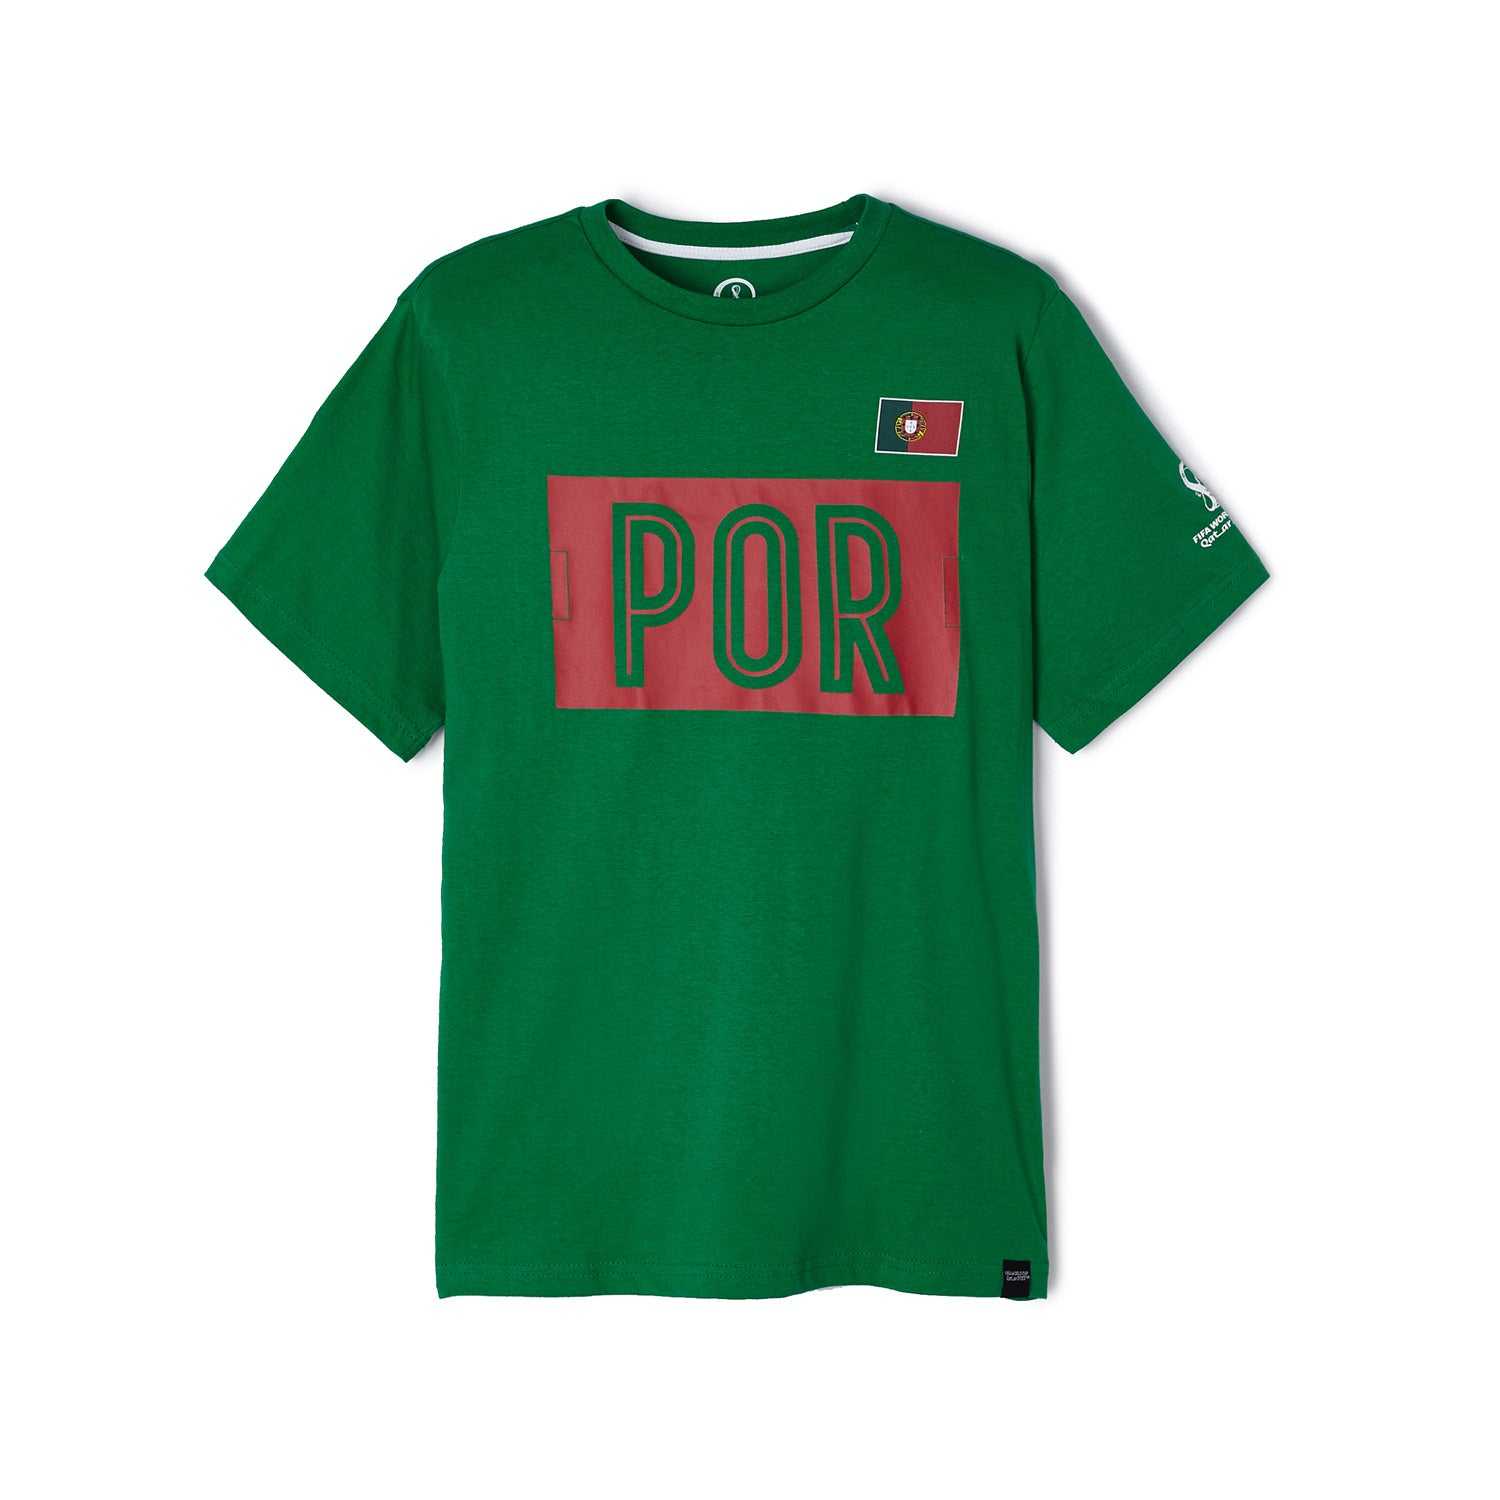 2022 World Cup Portugal Green T-Shirt - Men's